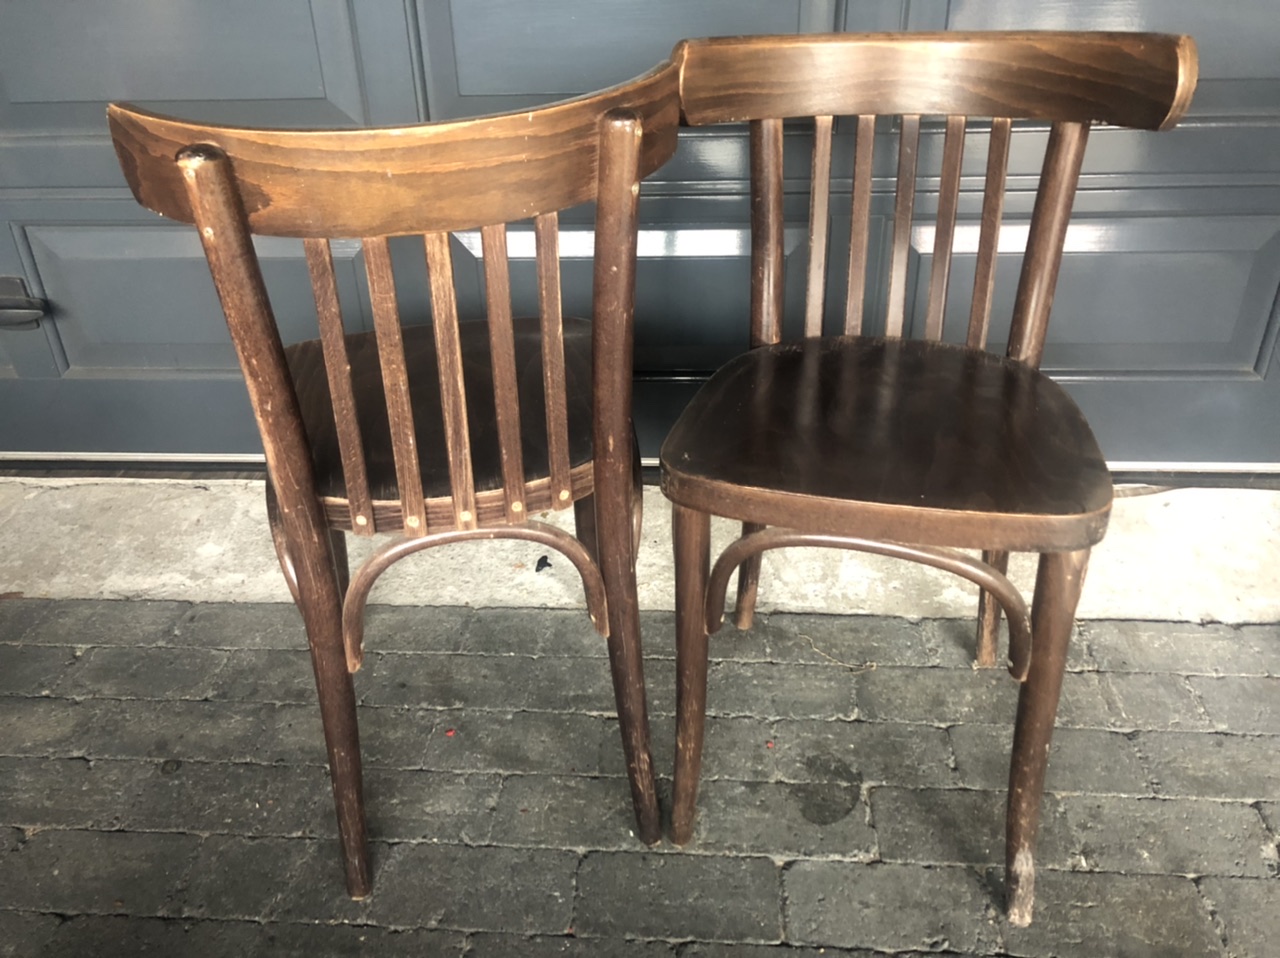 Thonet cafestoelen cafe stoelen restaurant kroeg mancave bar bistro bistrot chairs chairs